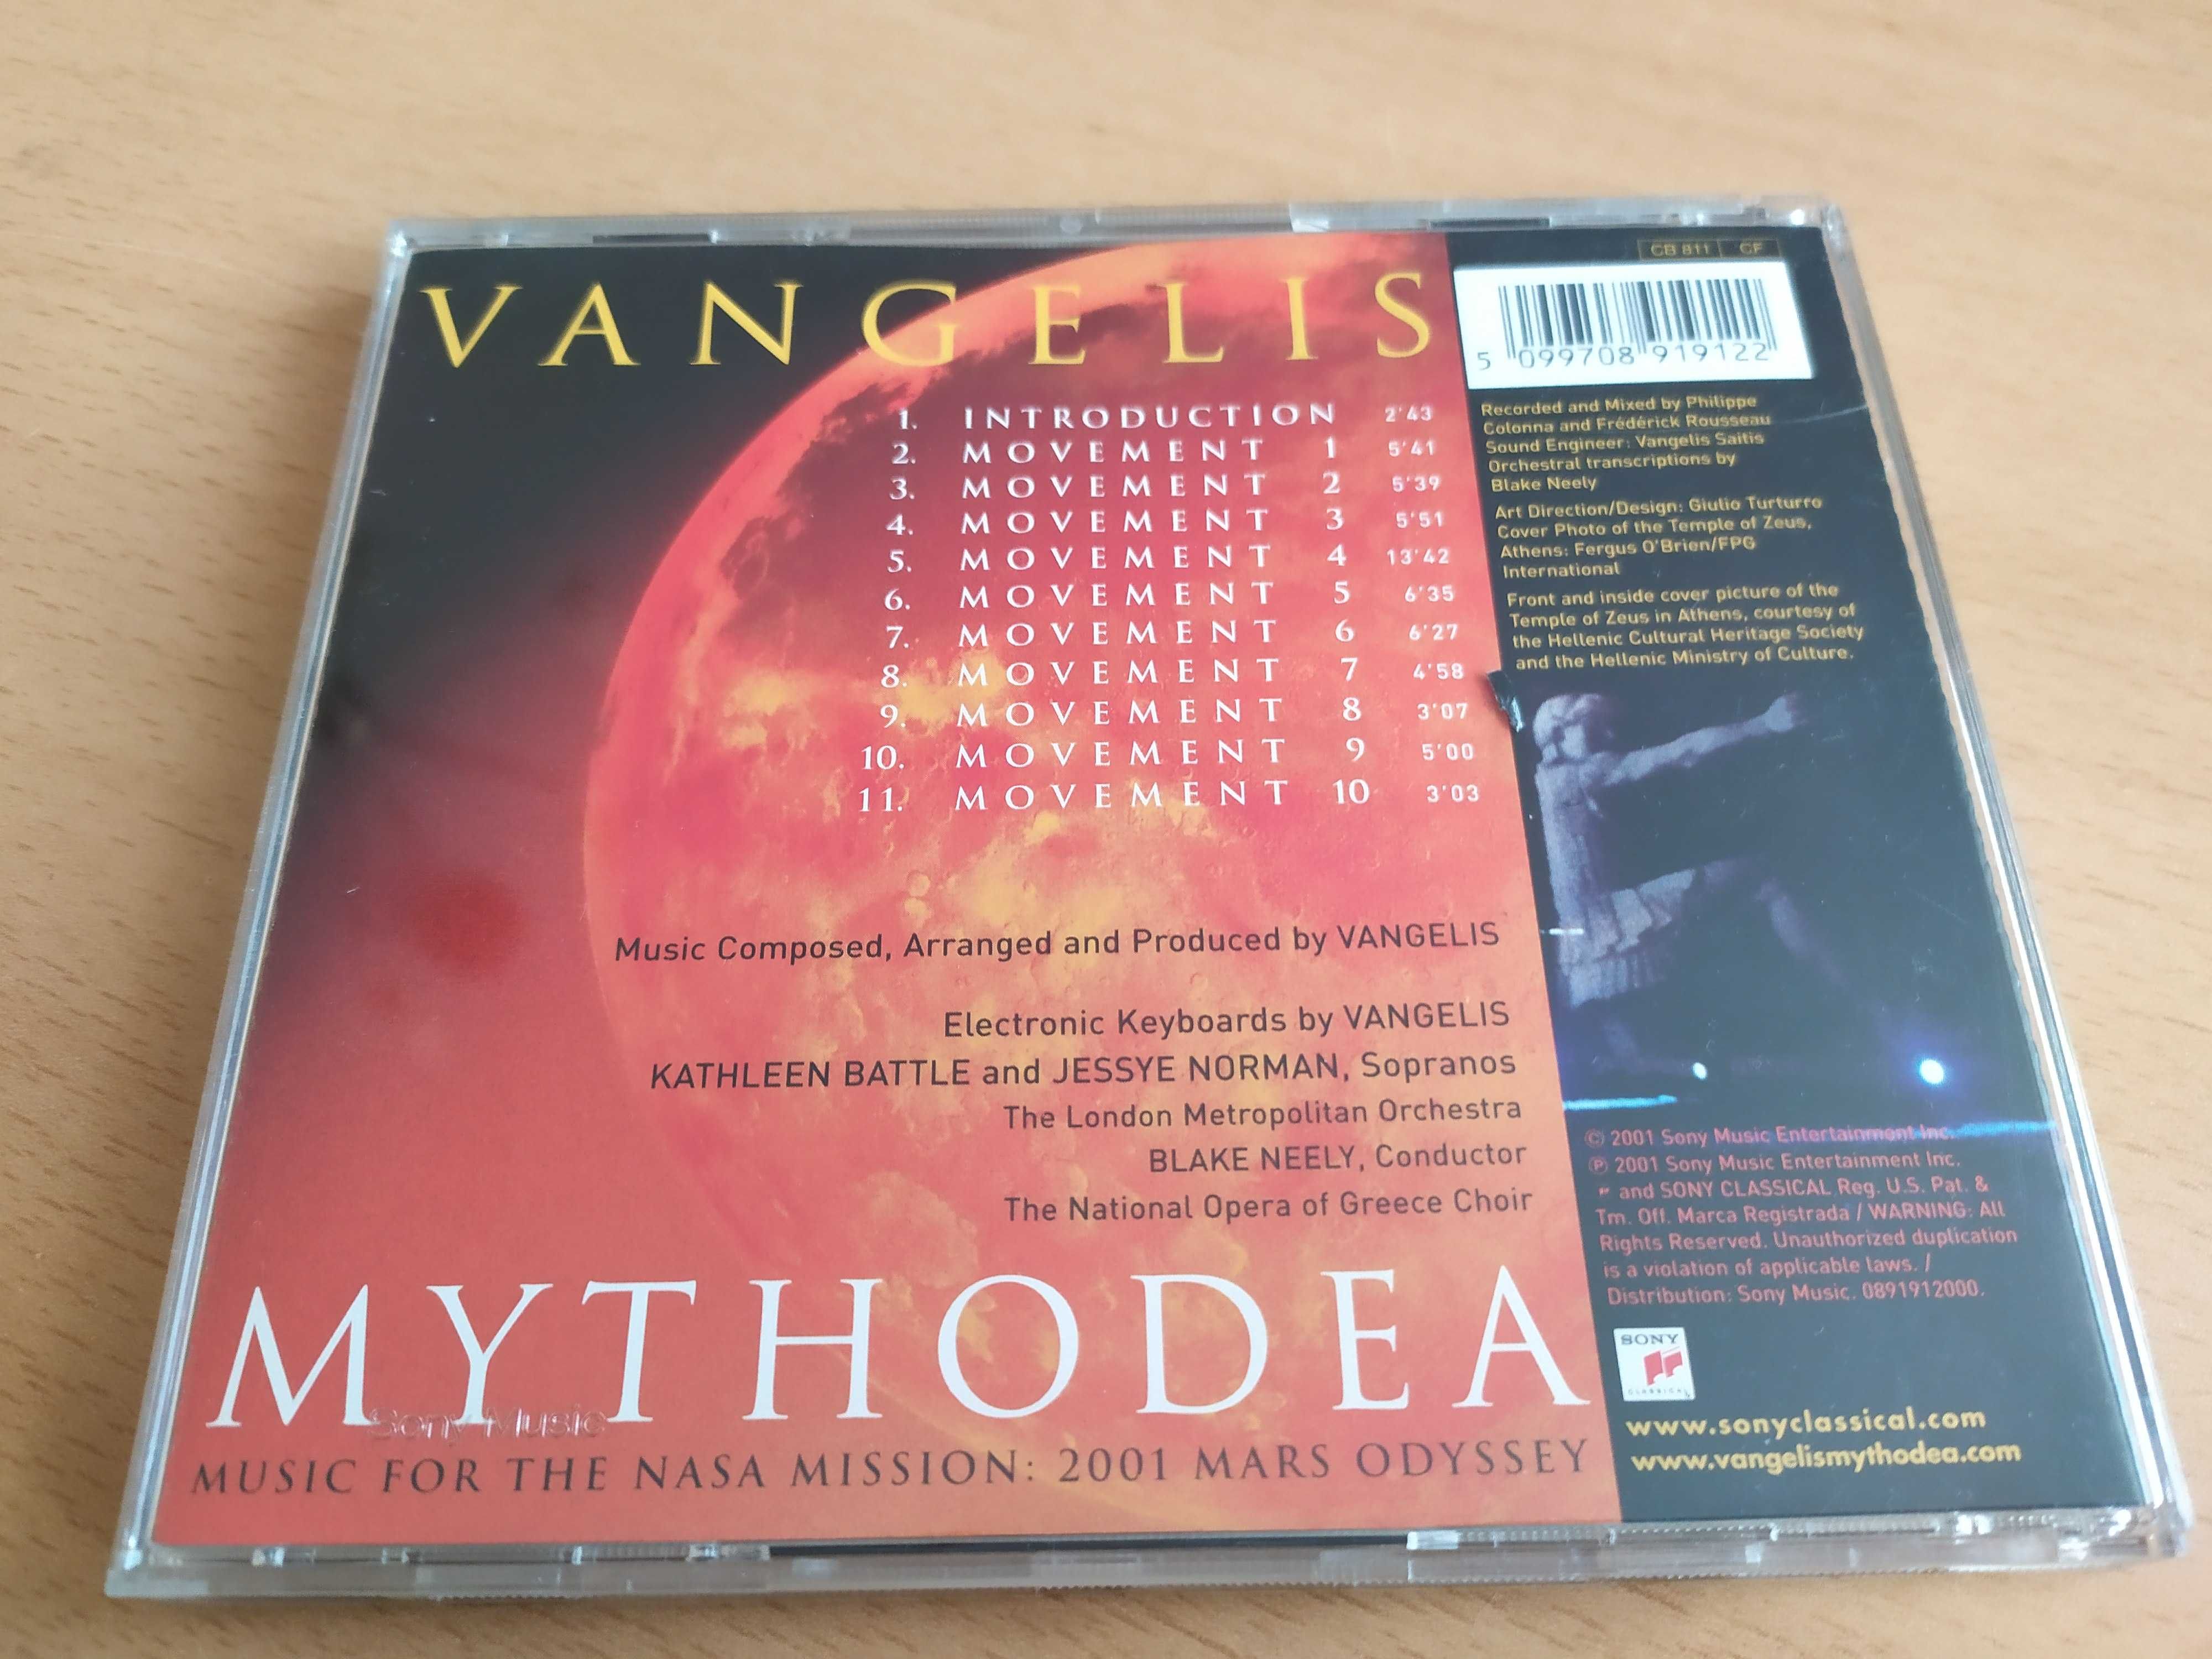 VANGELIS Mythodea Music For NASA Mission Odyssey